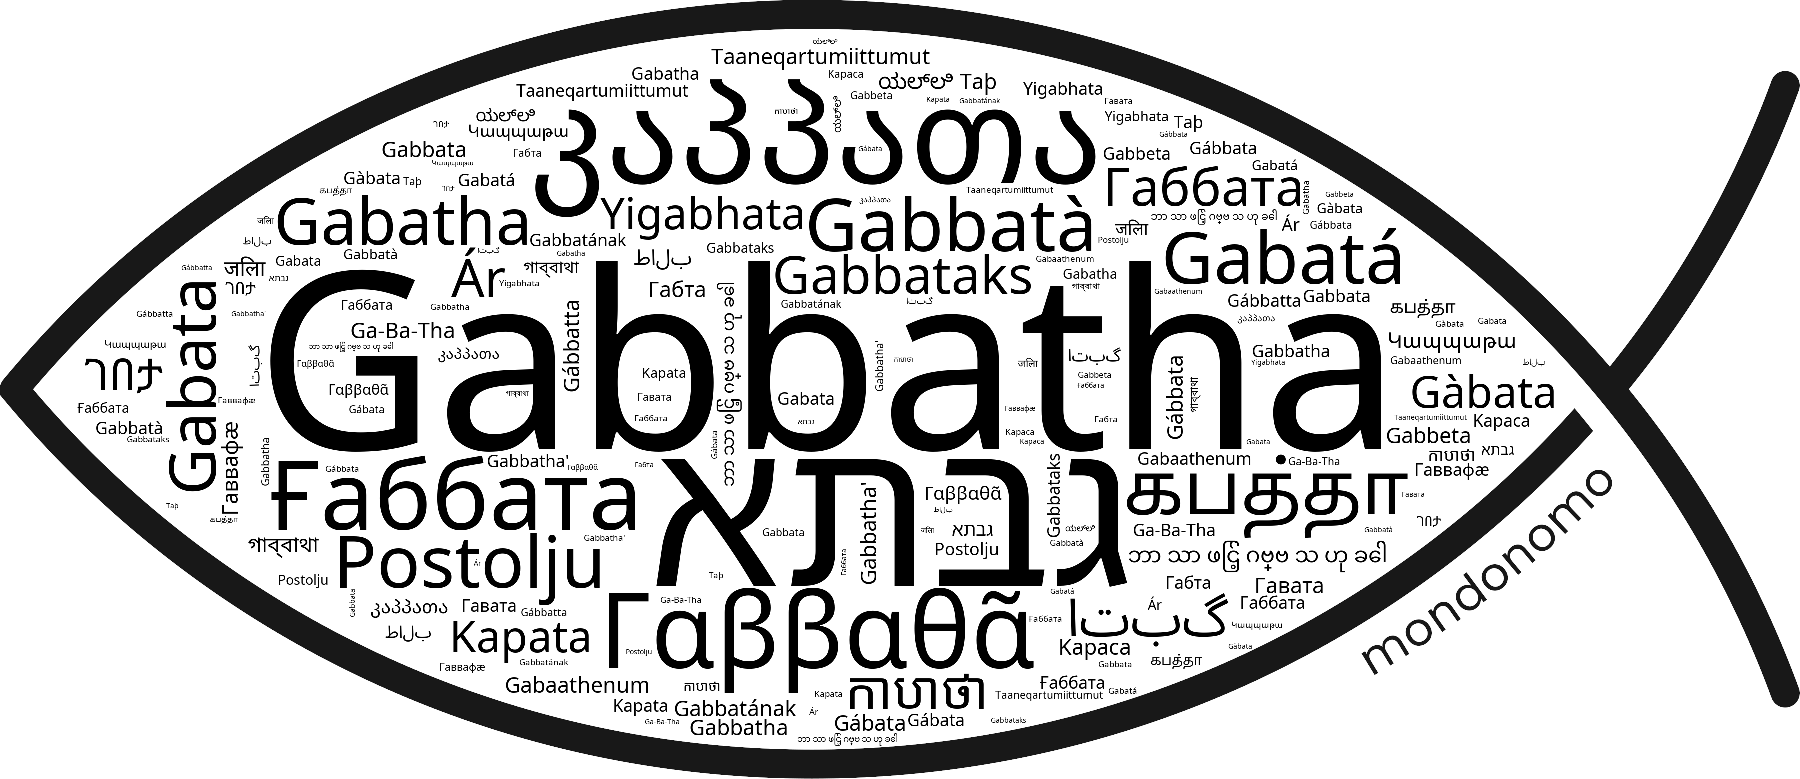 Name Gabbatha in the world's Bibles